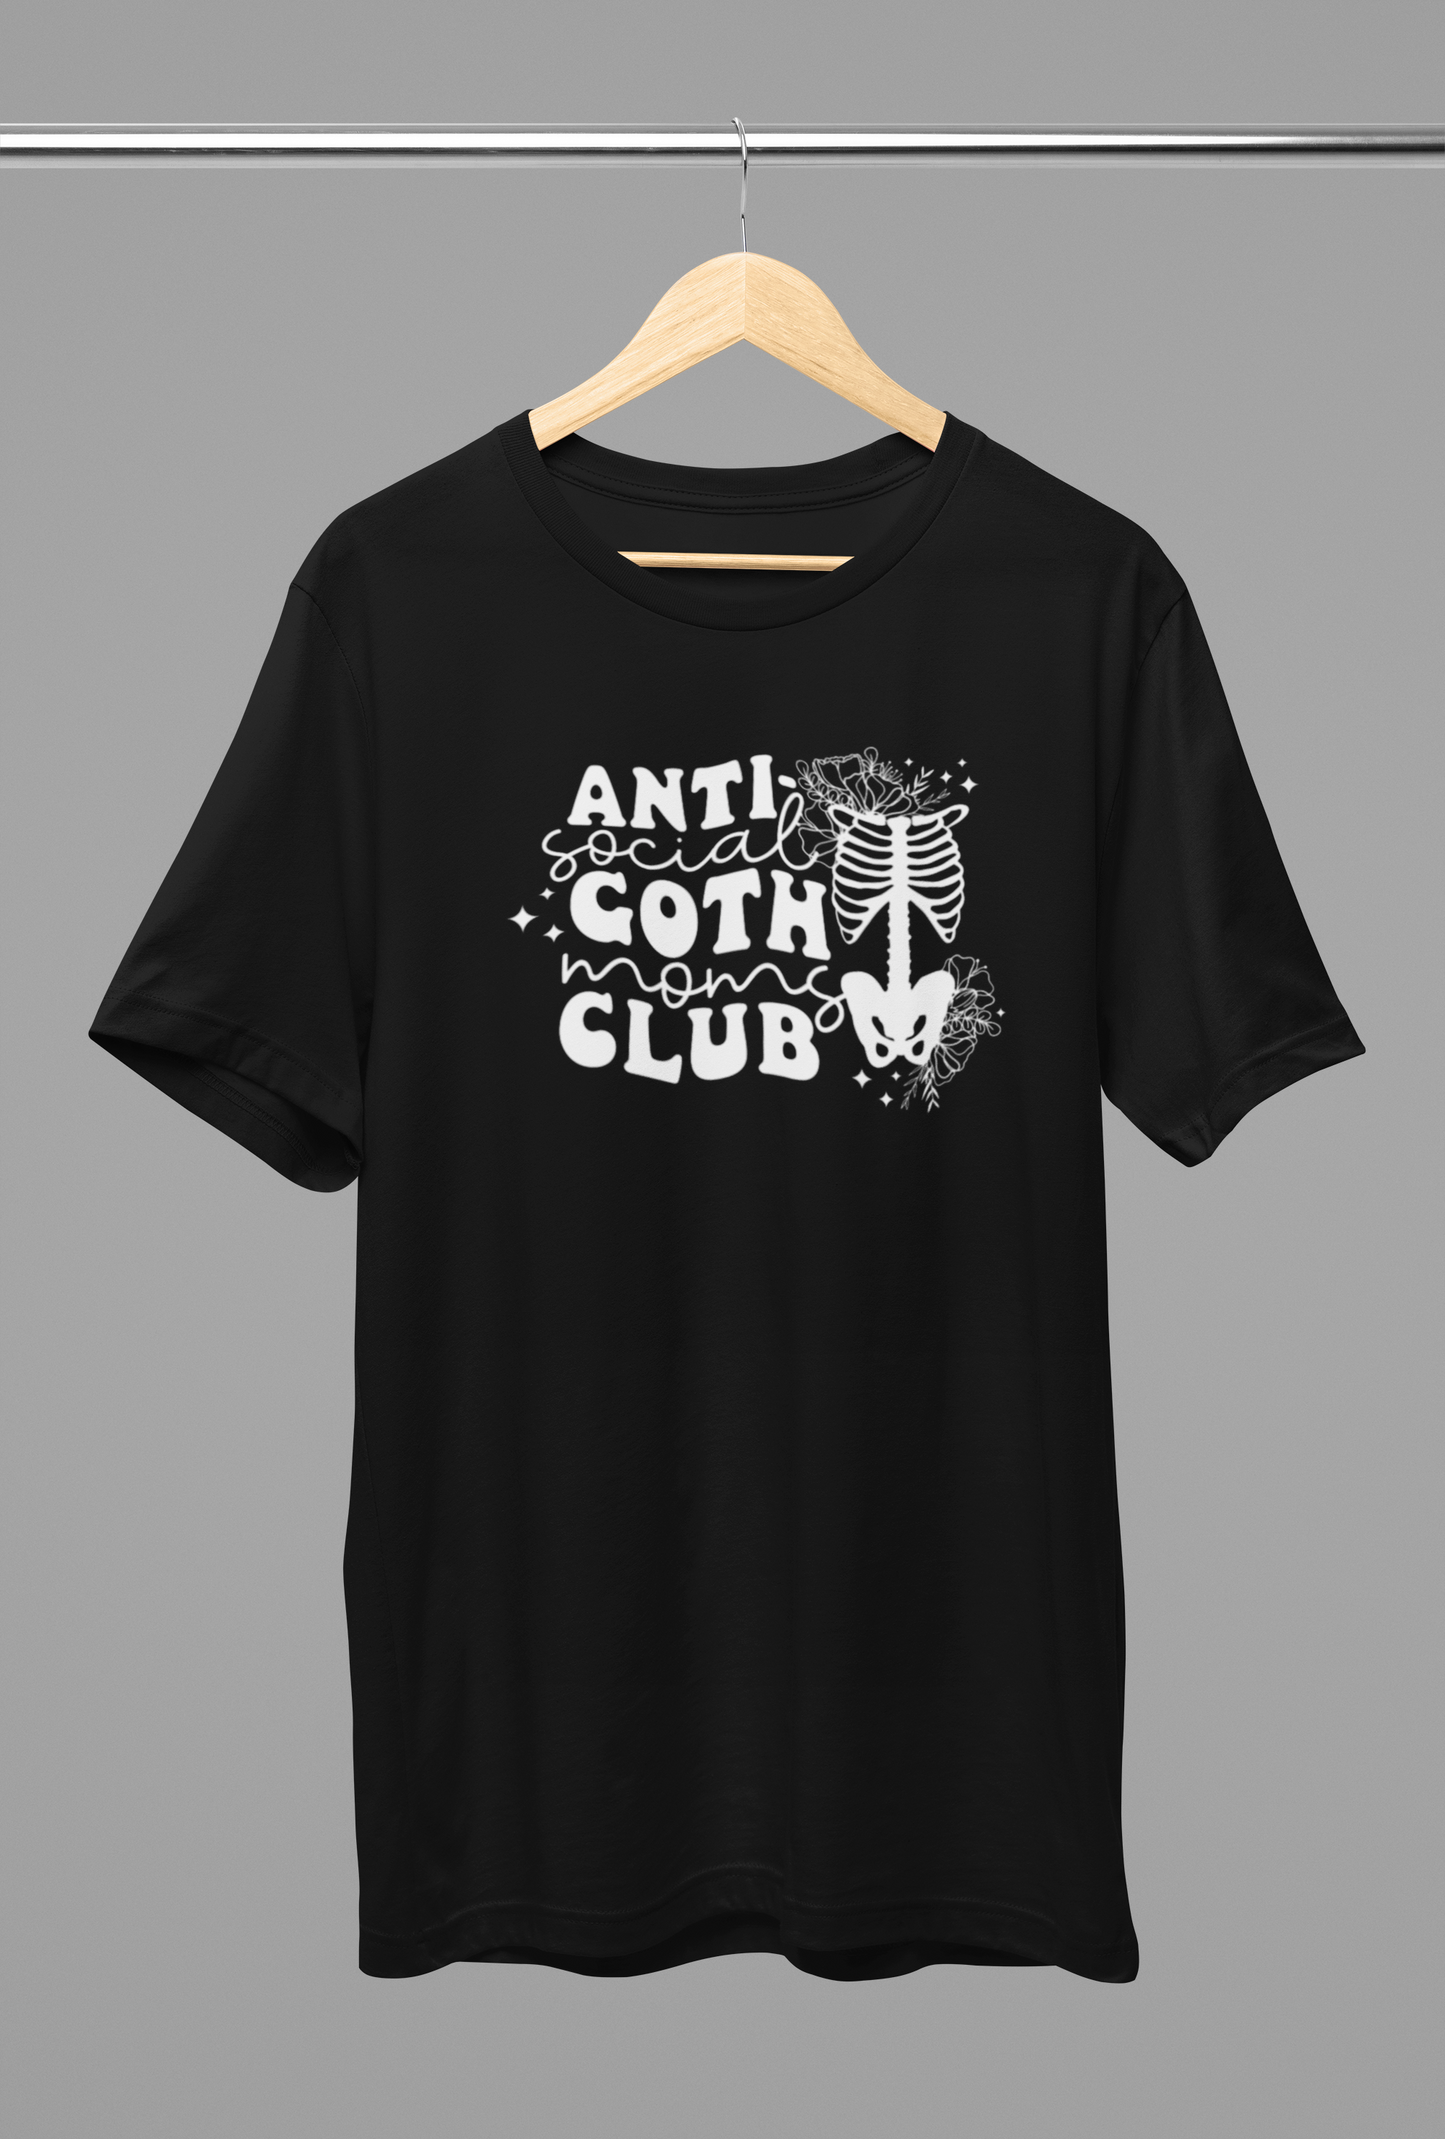 Anti Social Goth Moms Club Active Tee